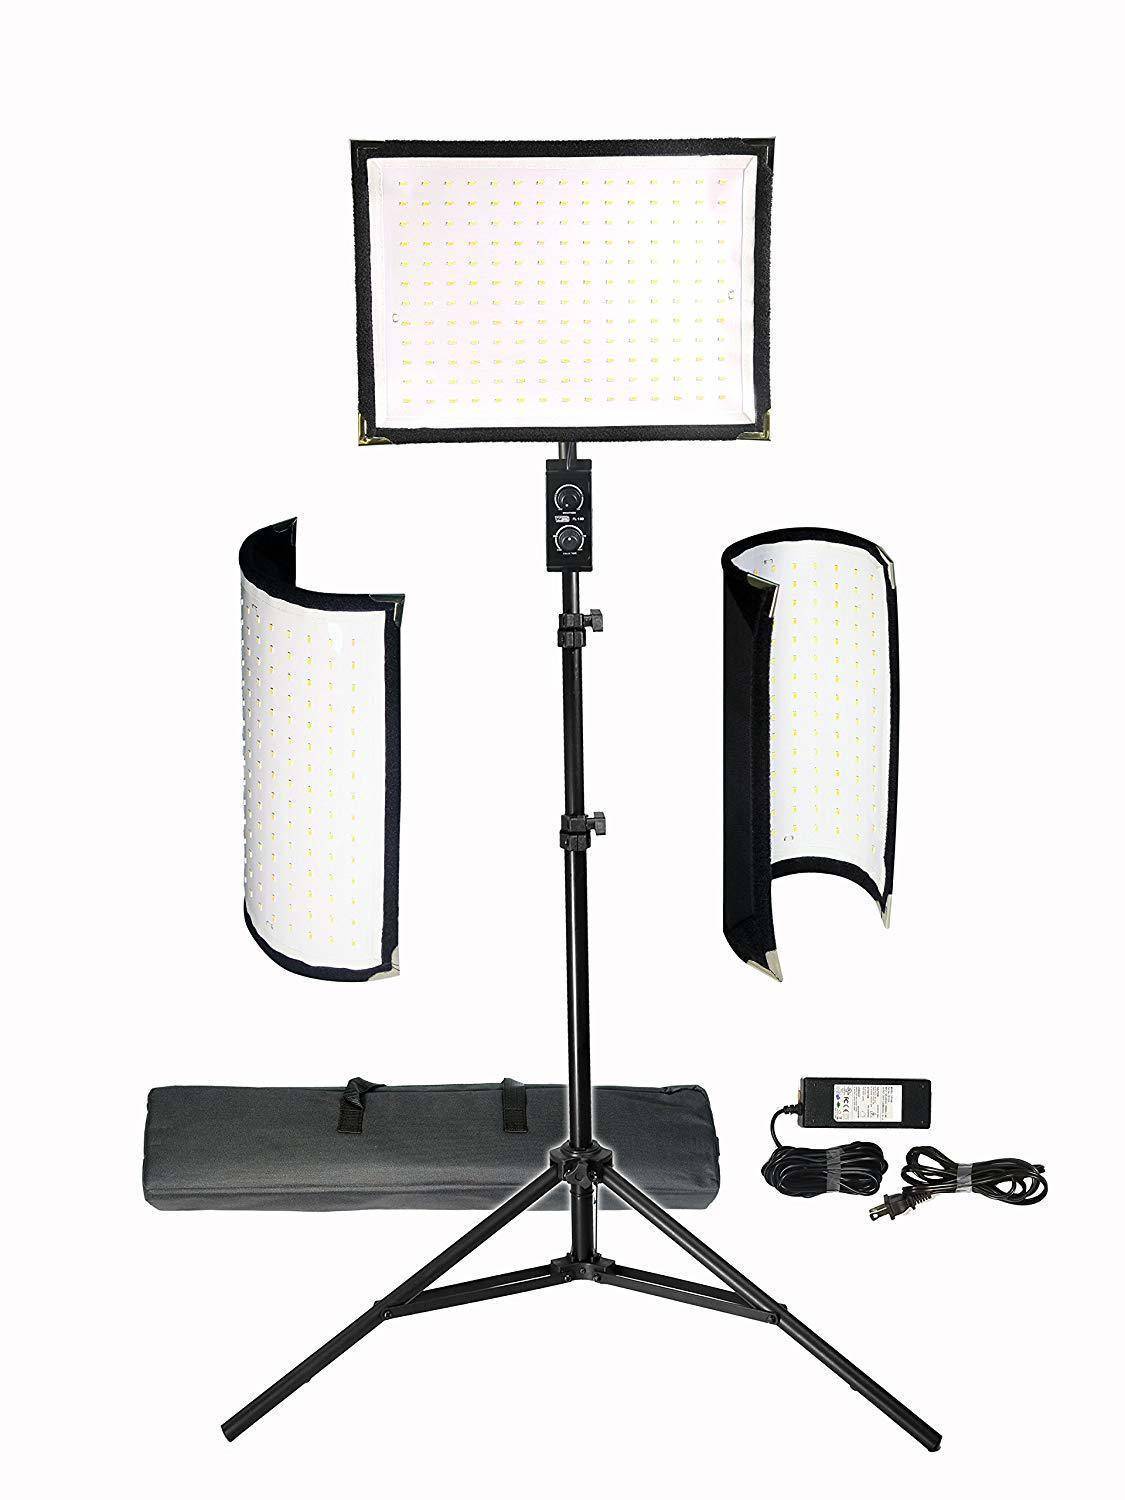 Vidpro FL-180 Flexible Vari-Color LED Light Panel Kit with Stand